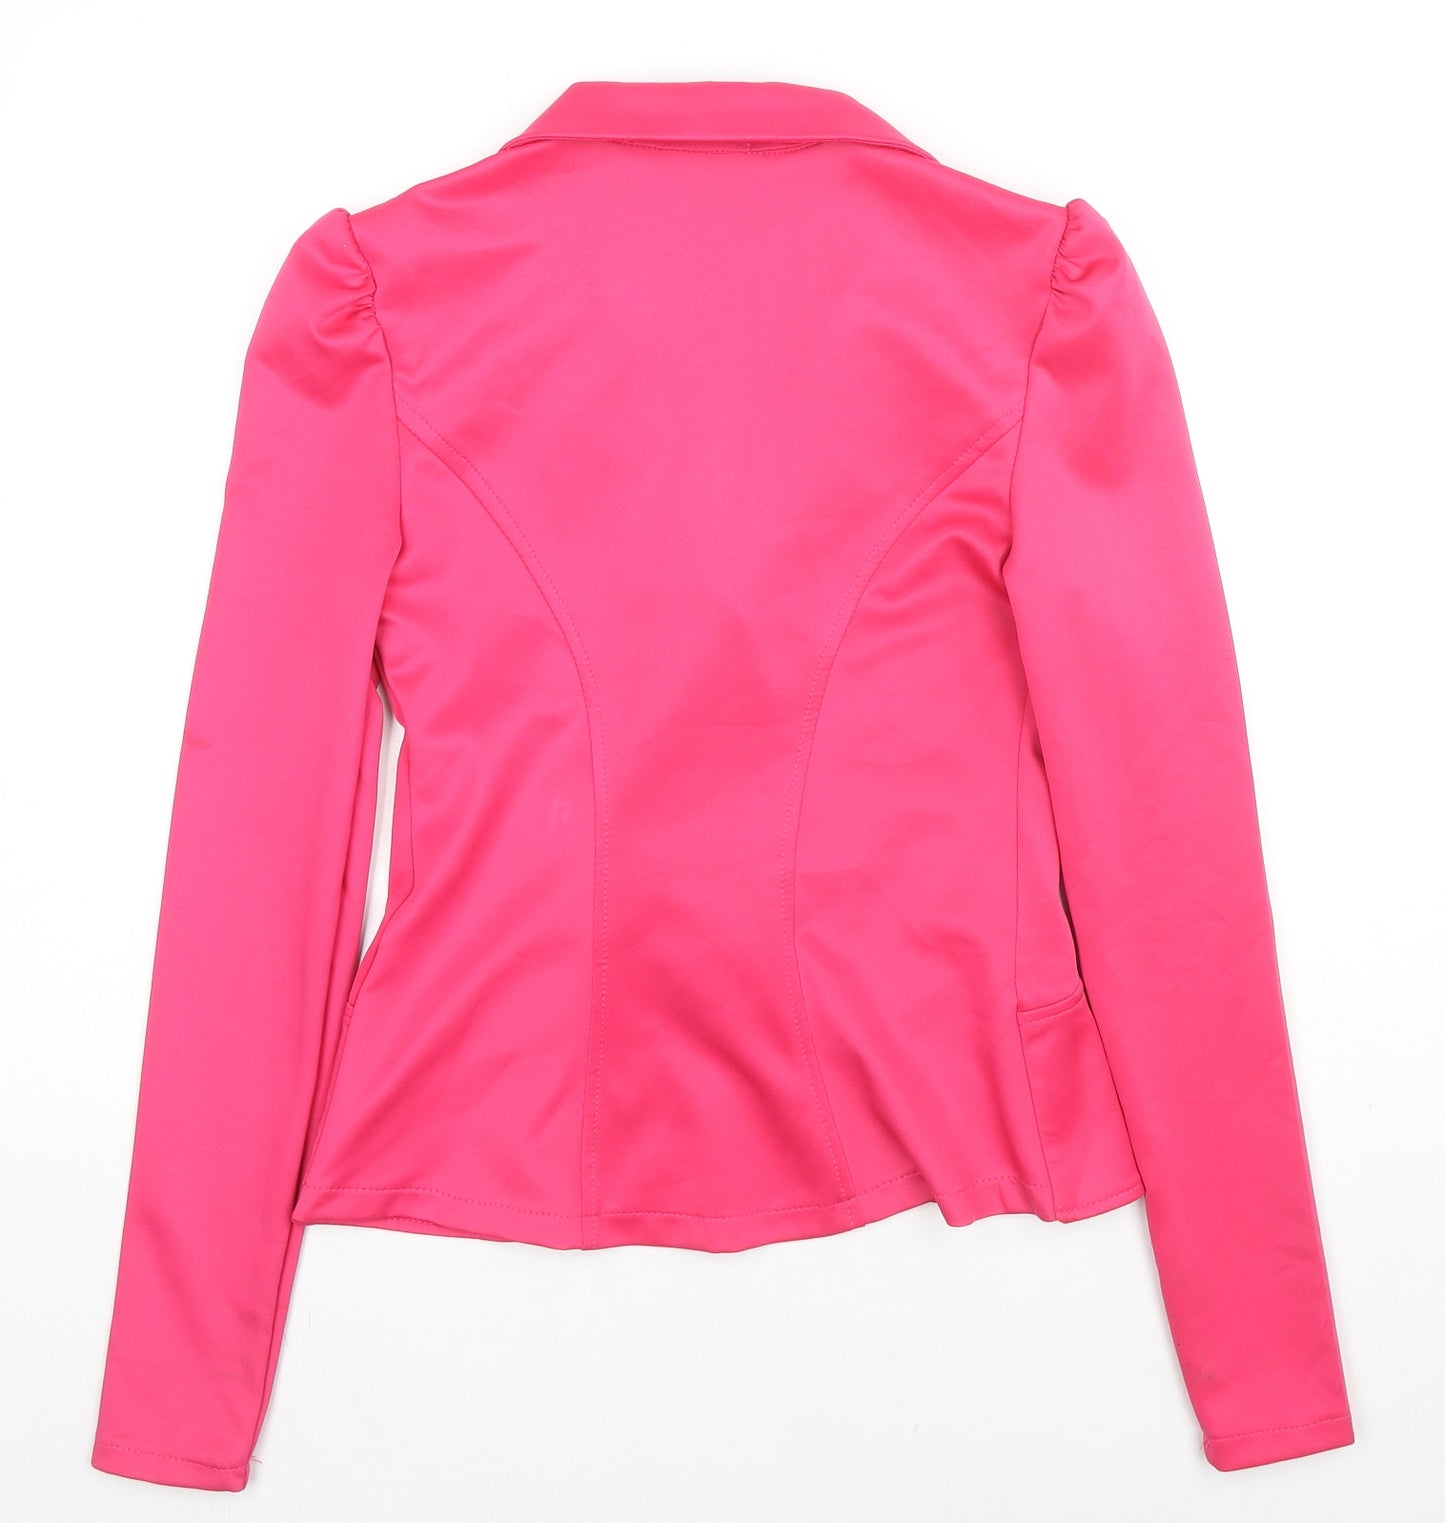 eve Womens Pink Jacket Blazer Size 10 Button